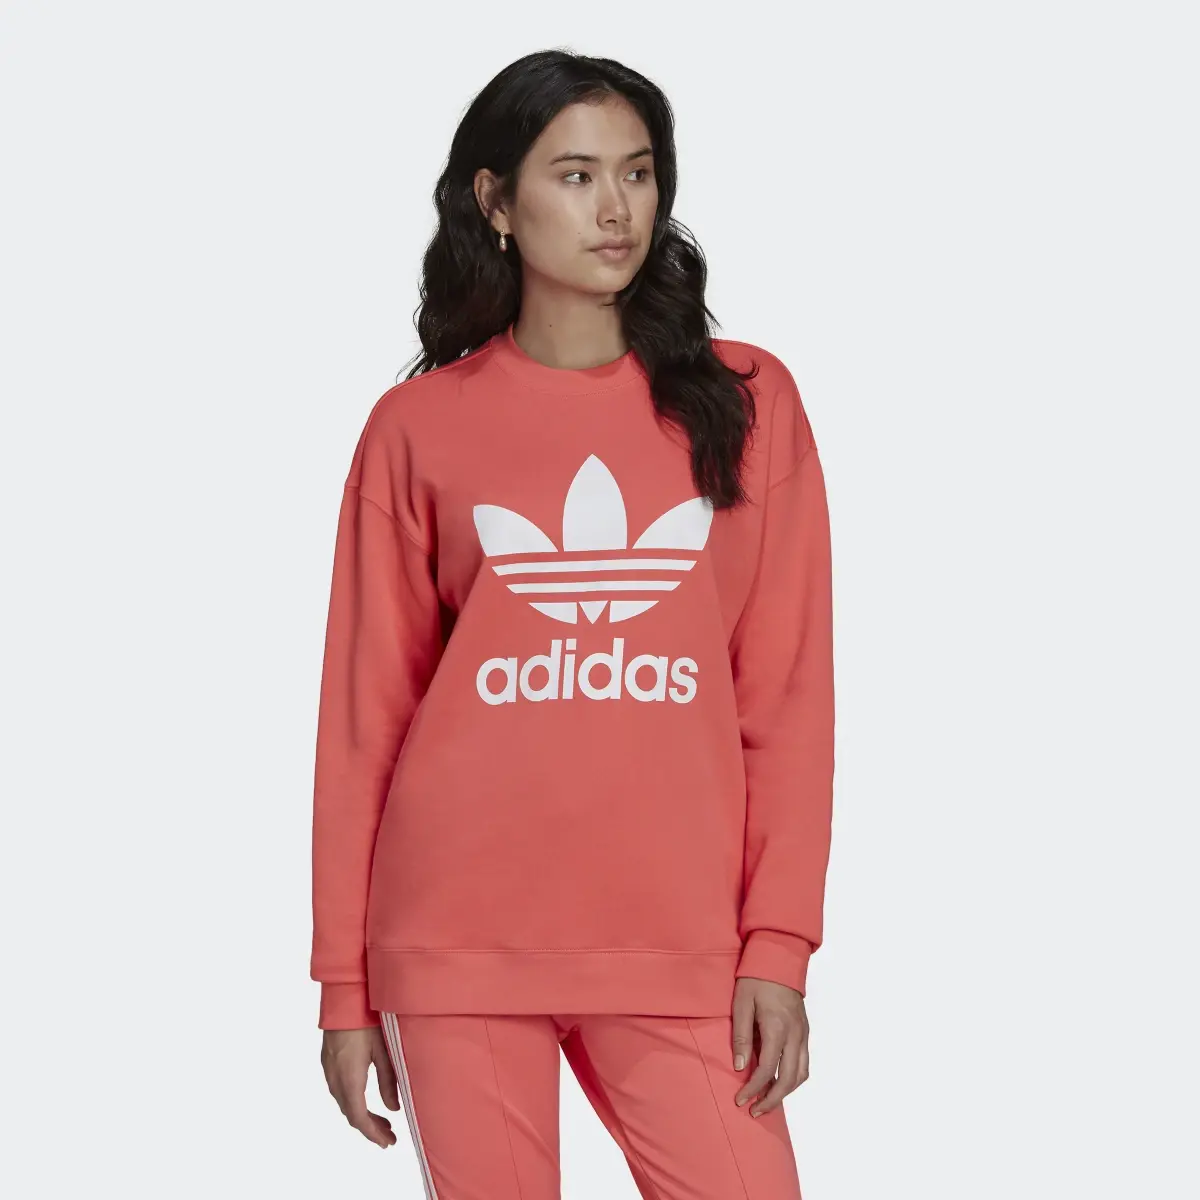 Adidas Trefoil Sweatshirt. 2